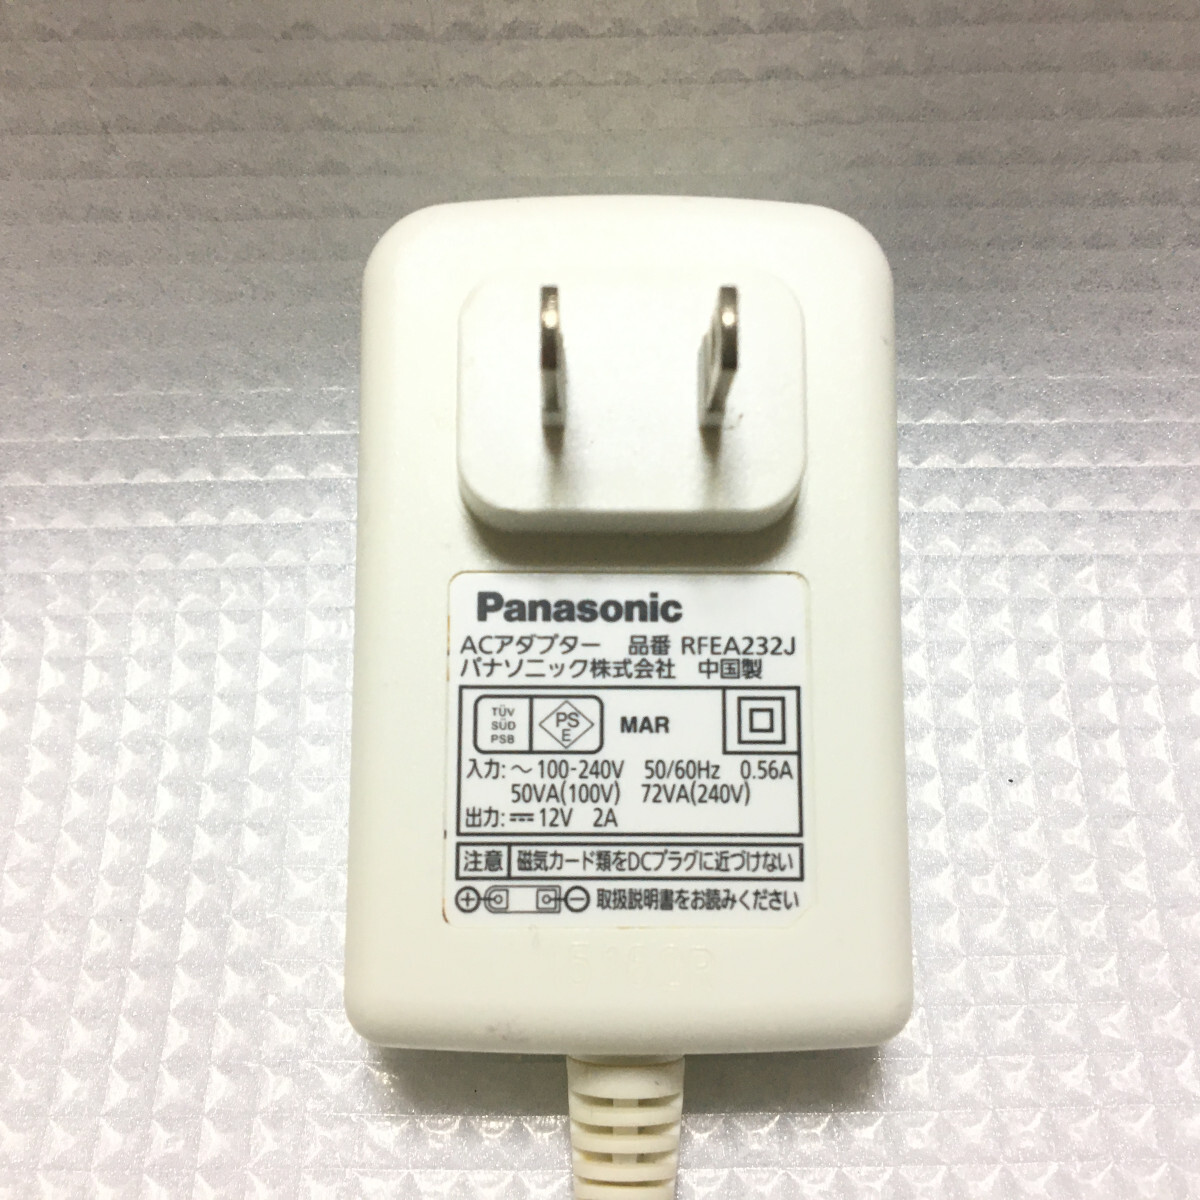 # Panasonic original AC adaptor RFEA232J-5S viera power supply cable UN-15T5-W UN-DM10C1-K UN-JD10T2 UN-JD10T3 UN-DM15C1-K UN-10E5-W